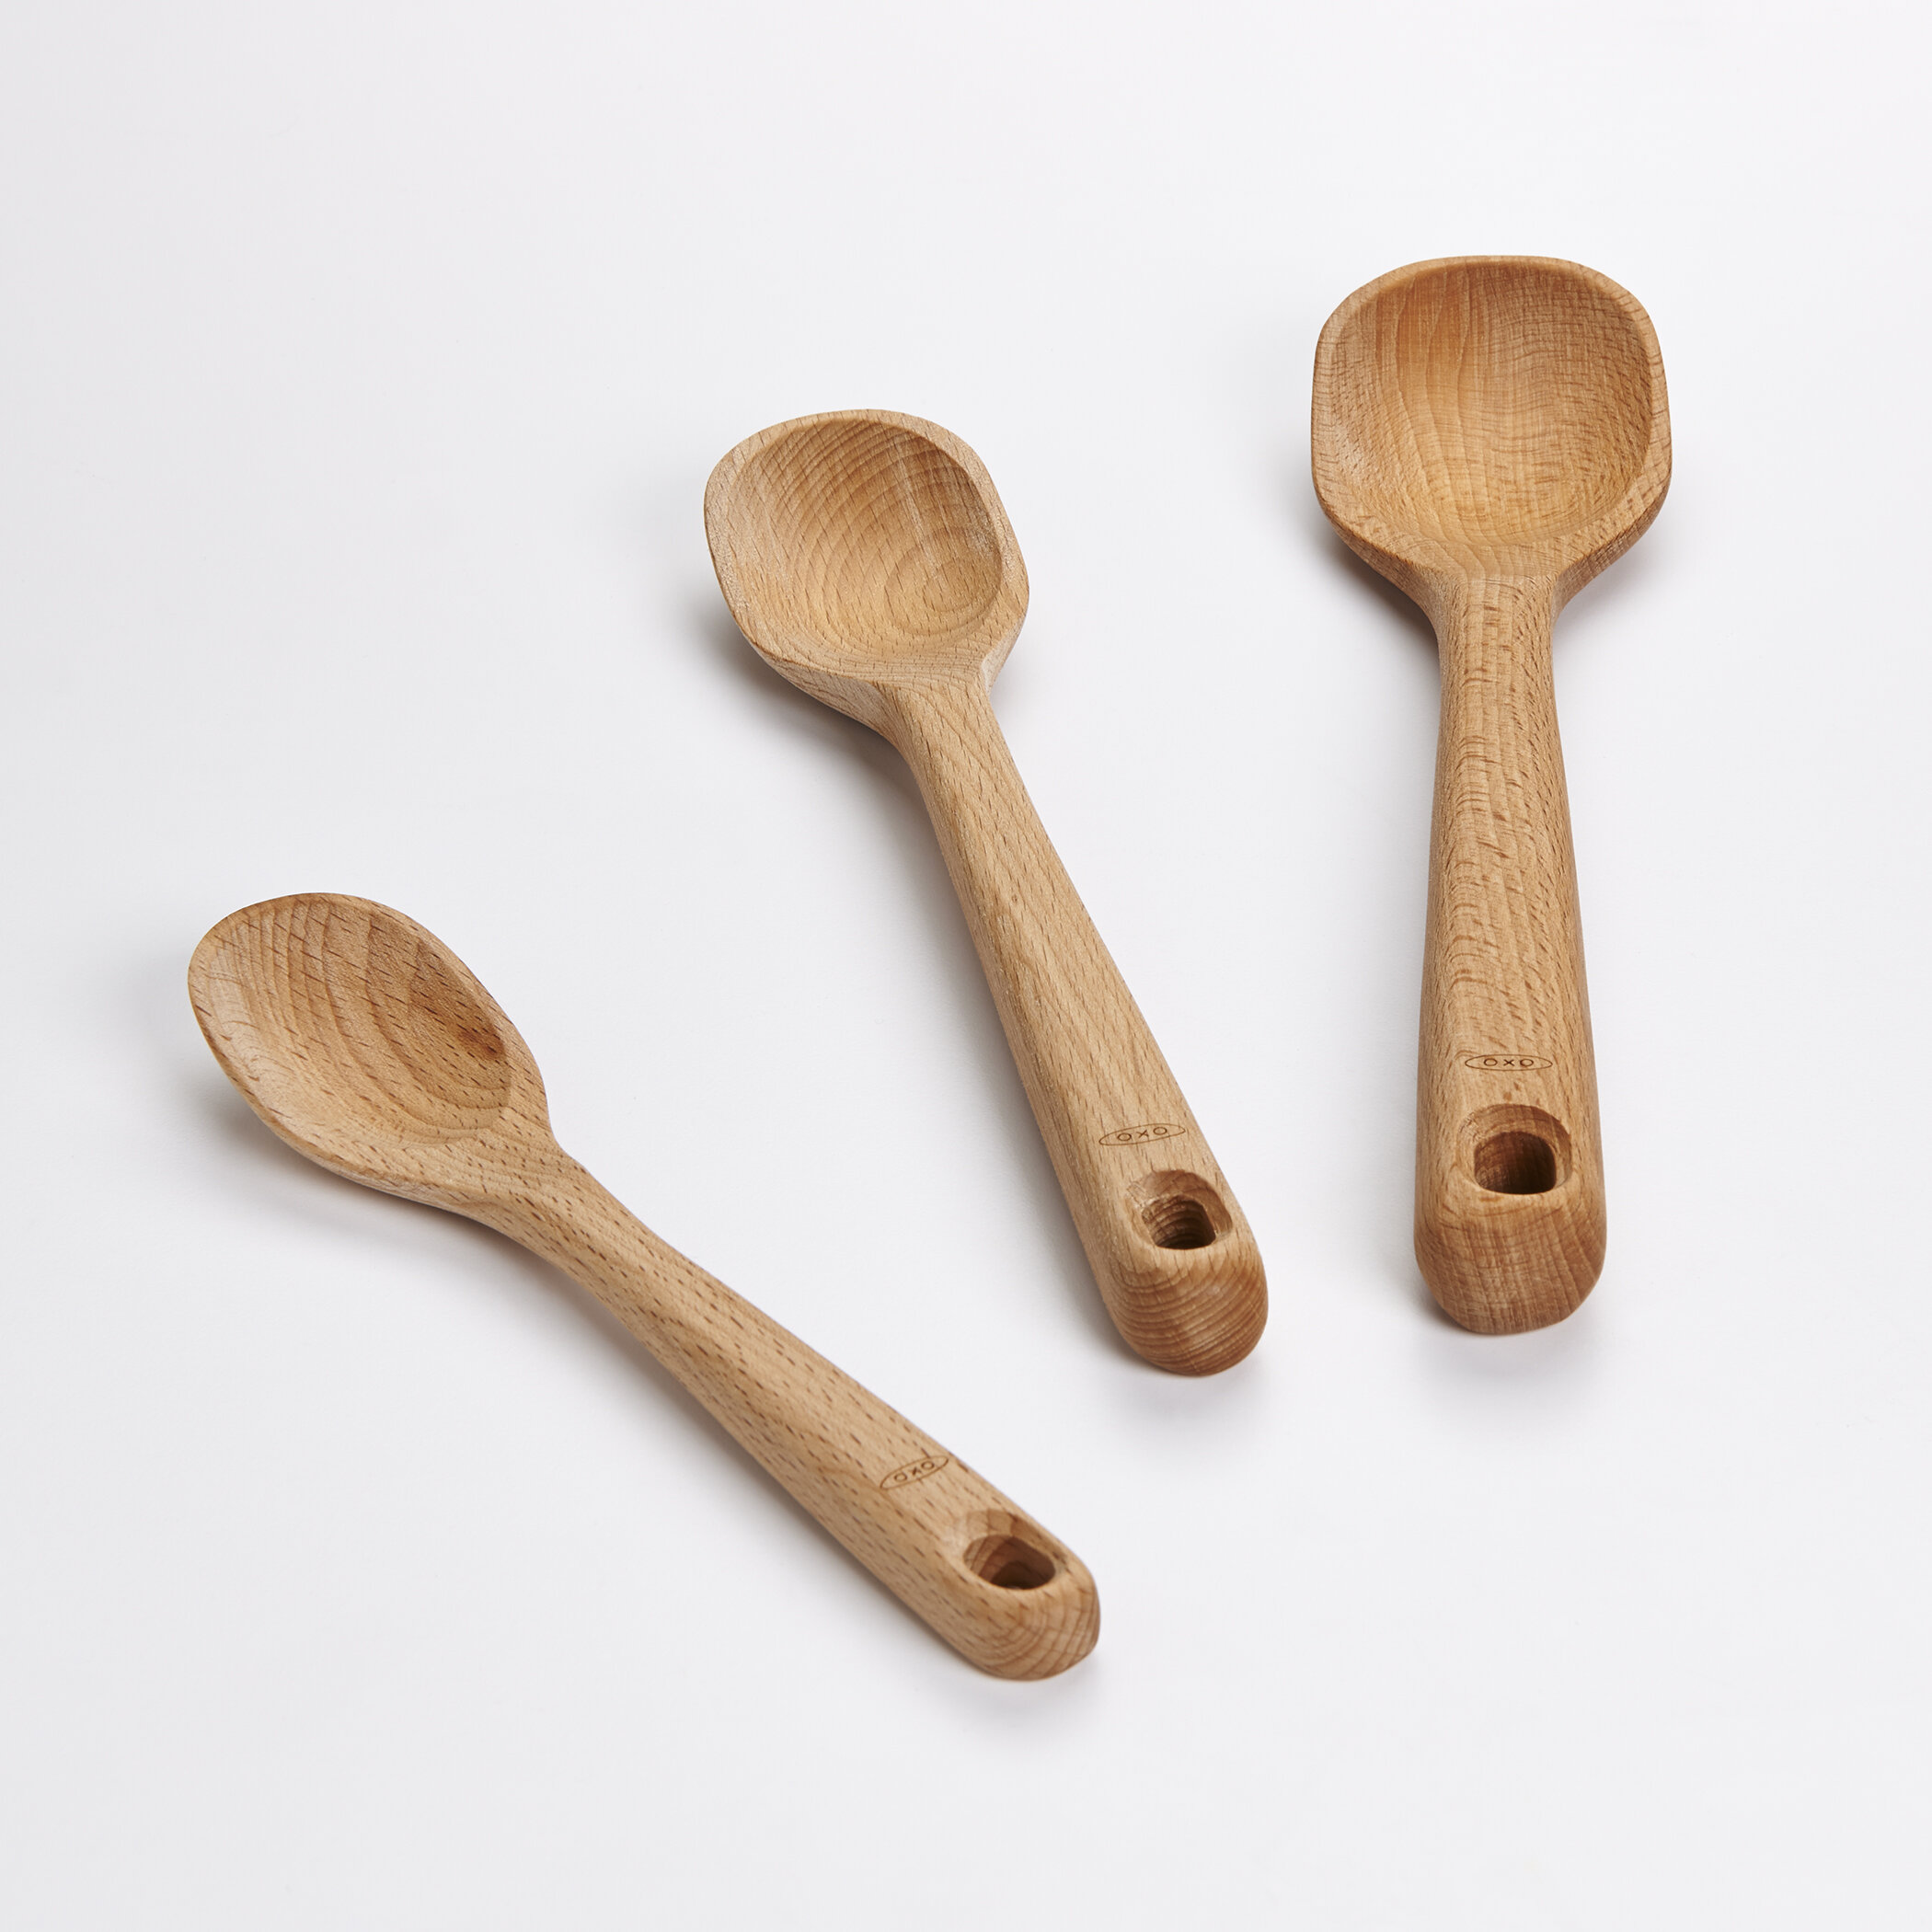 OXO Good Grips 3-piece Peeler Set - Spoons N Spice